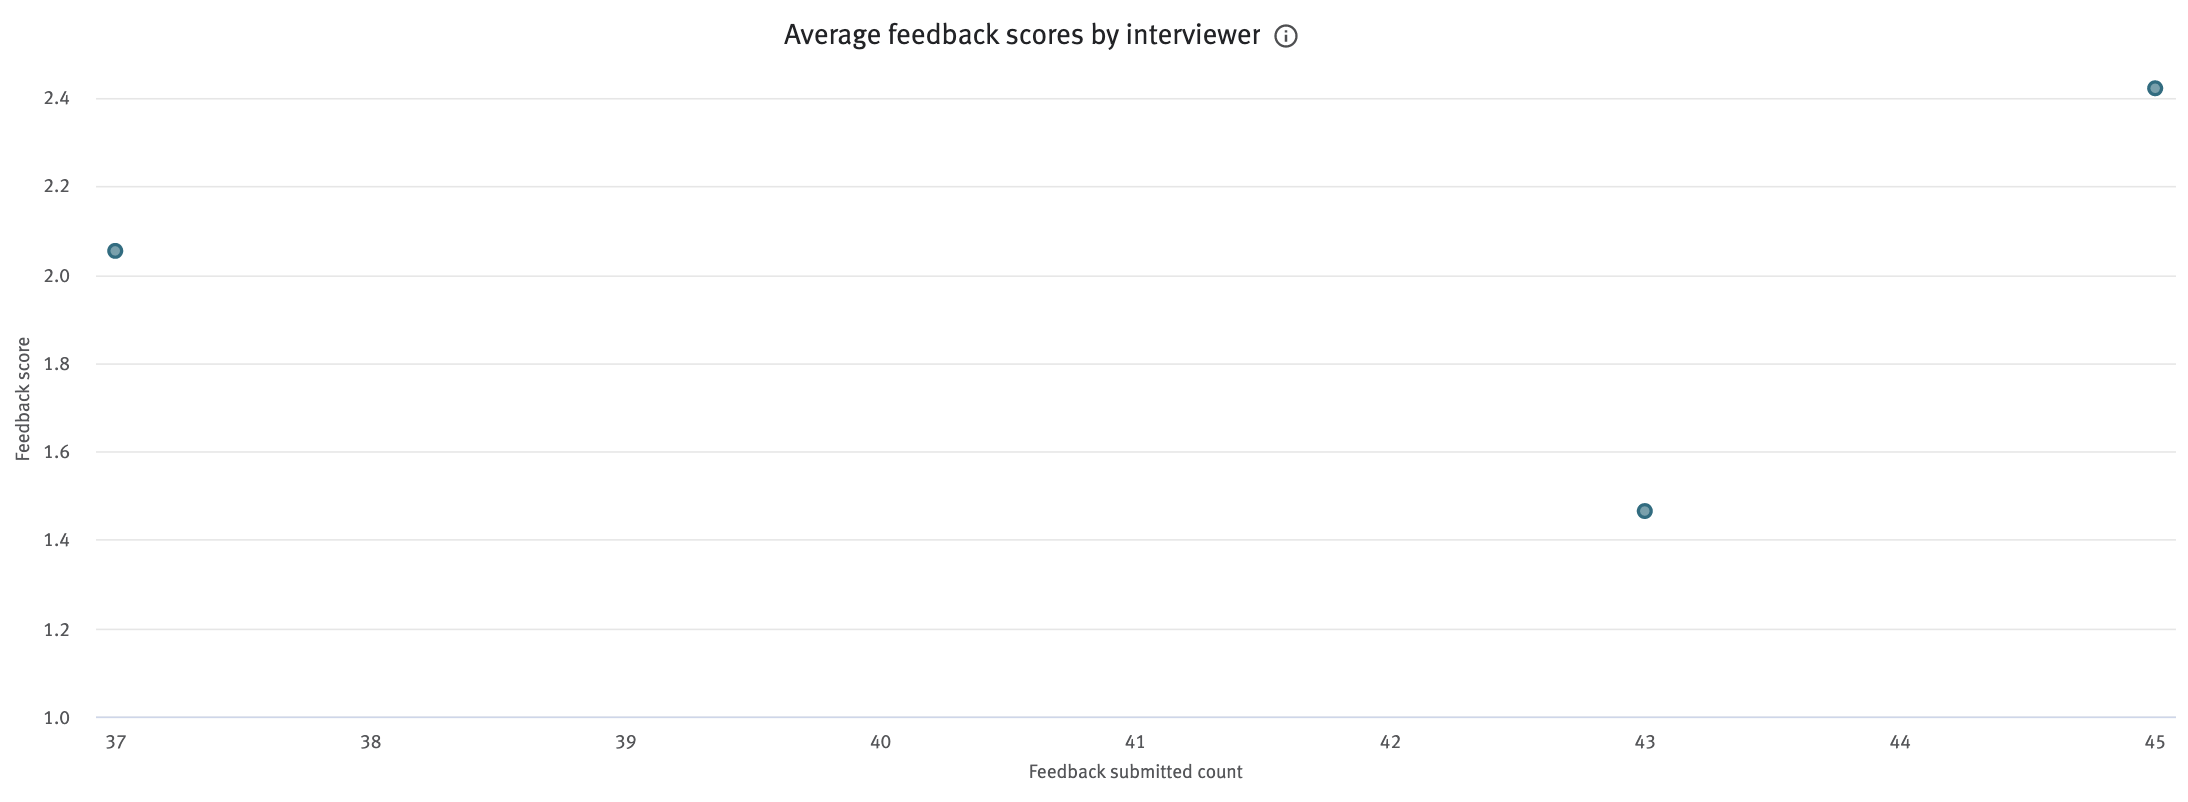 Average feedback scores by interviewer scatter plot